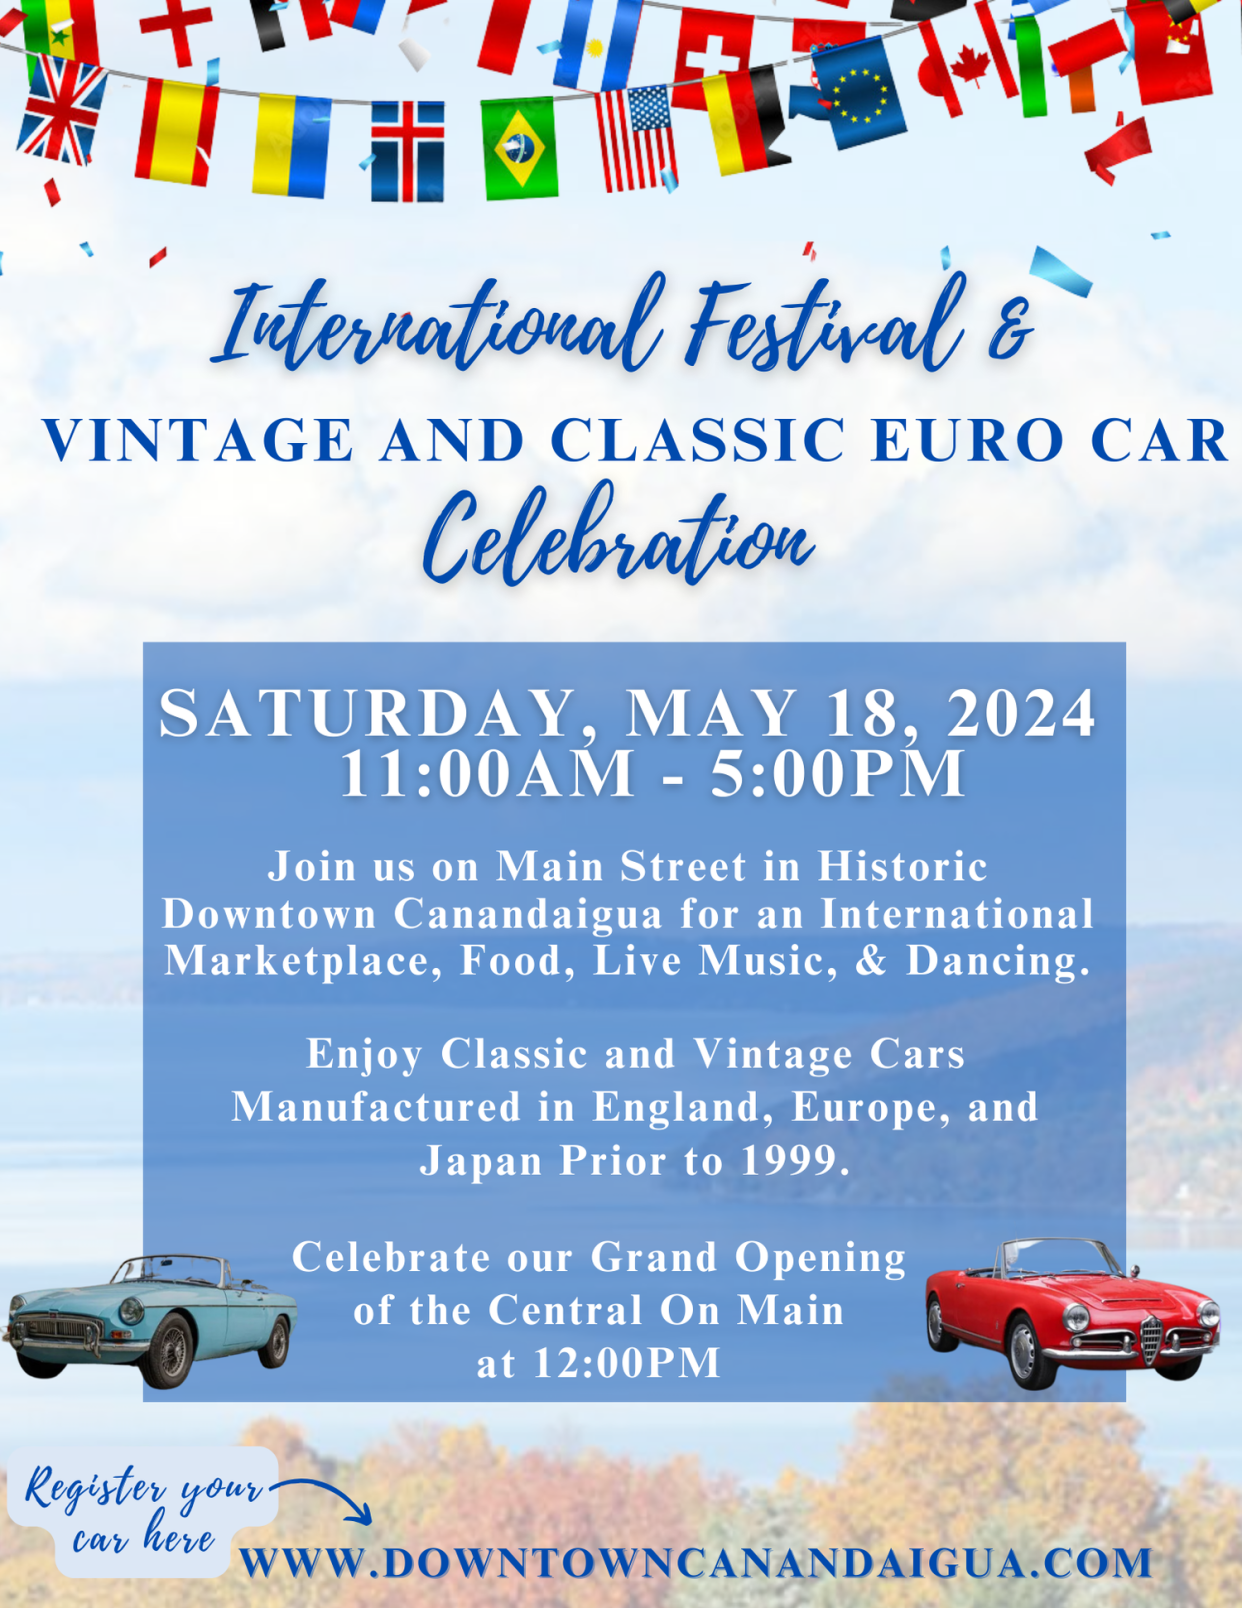 Flyer for upcoming Canandaigua International Festival & Vintage Car Celebration